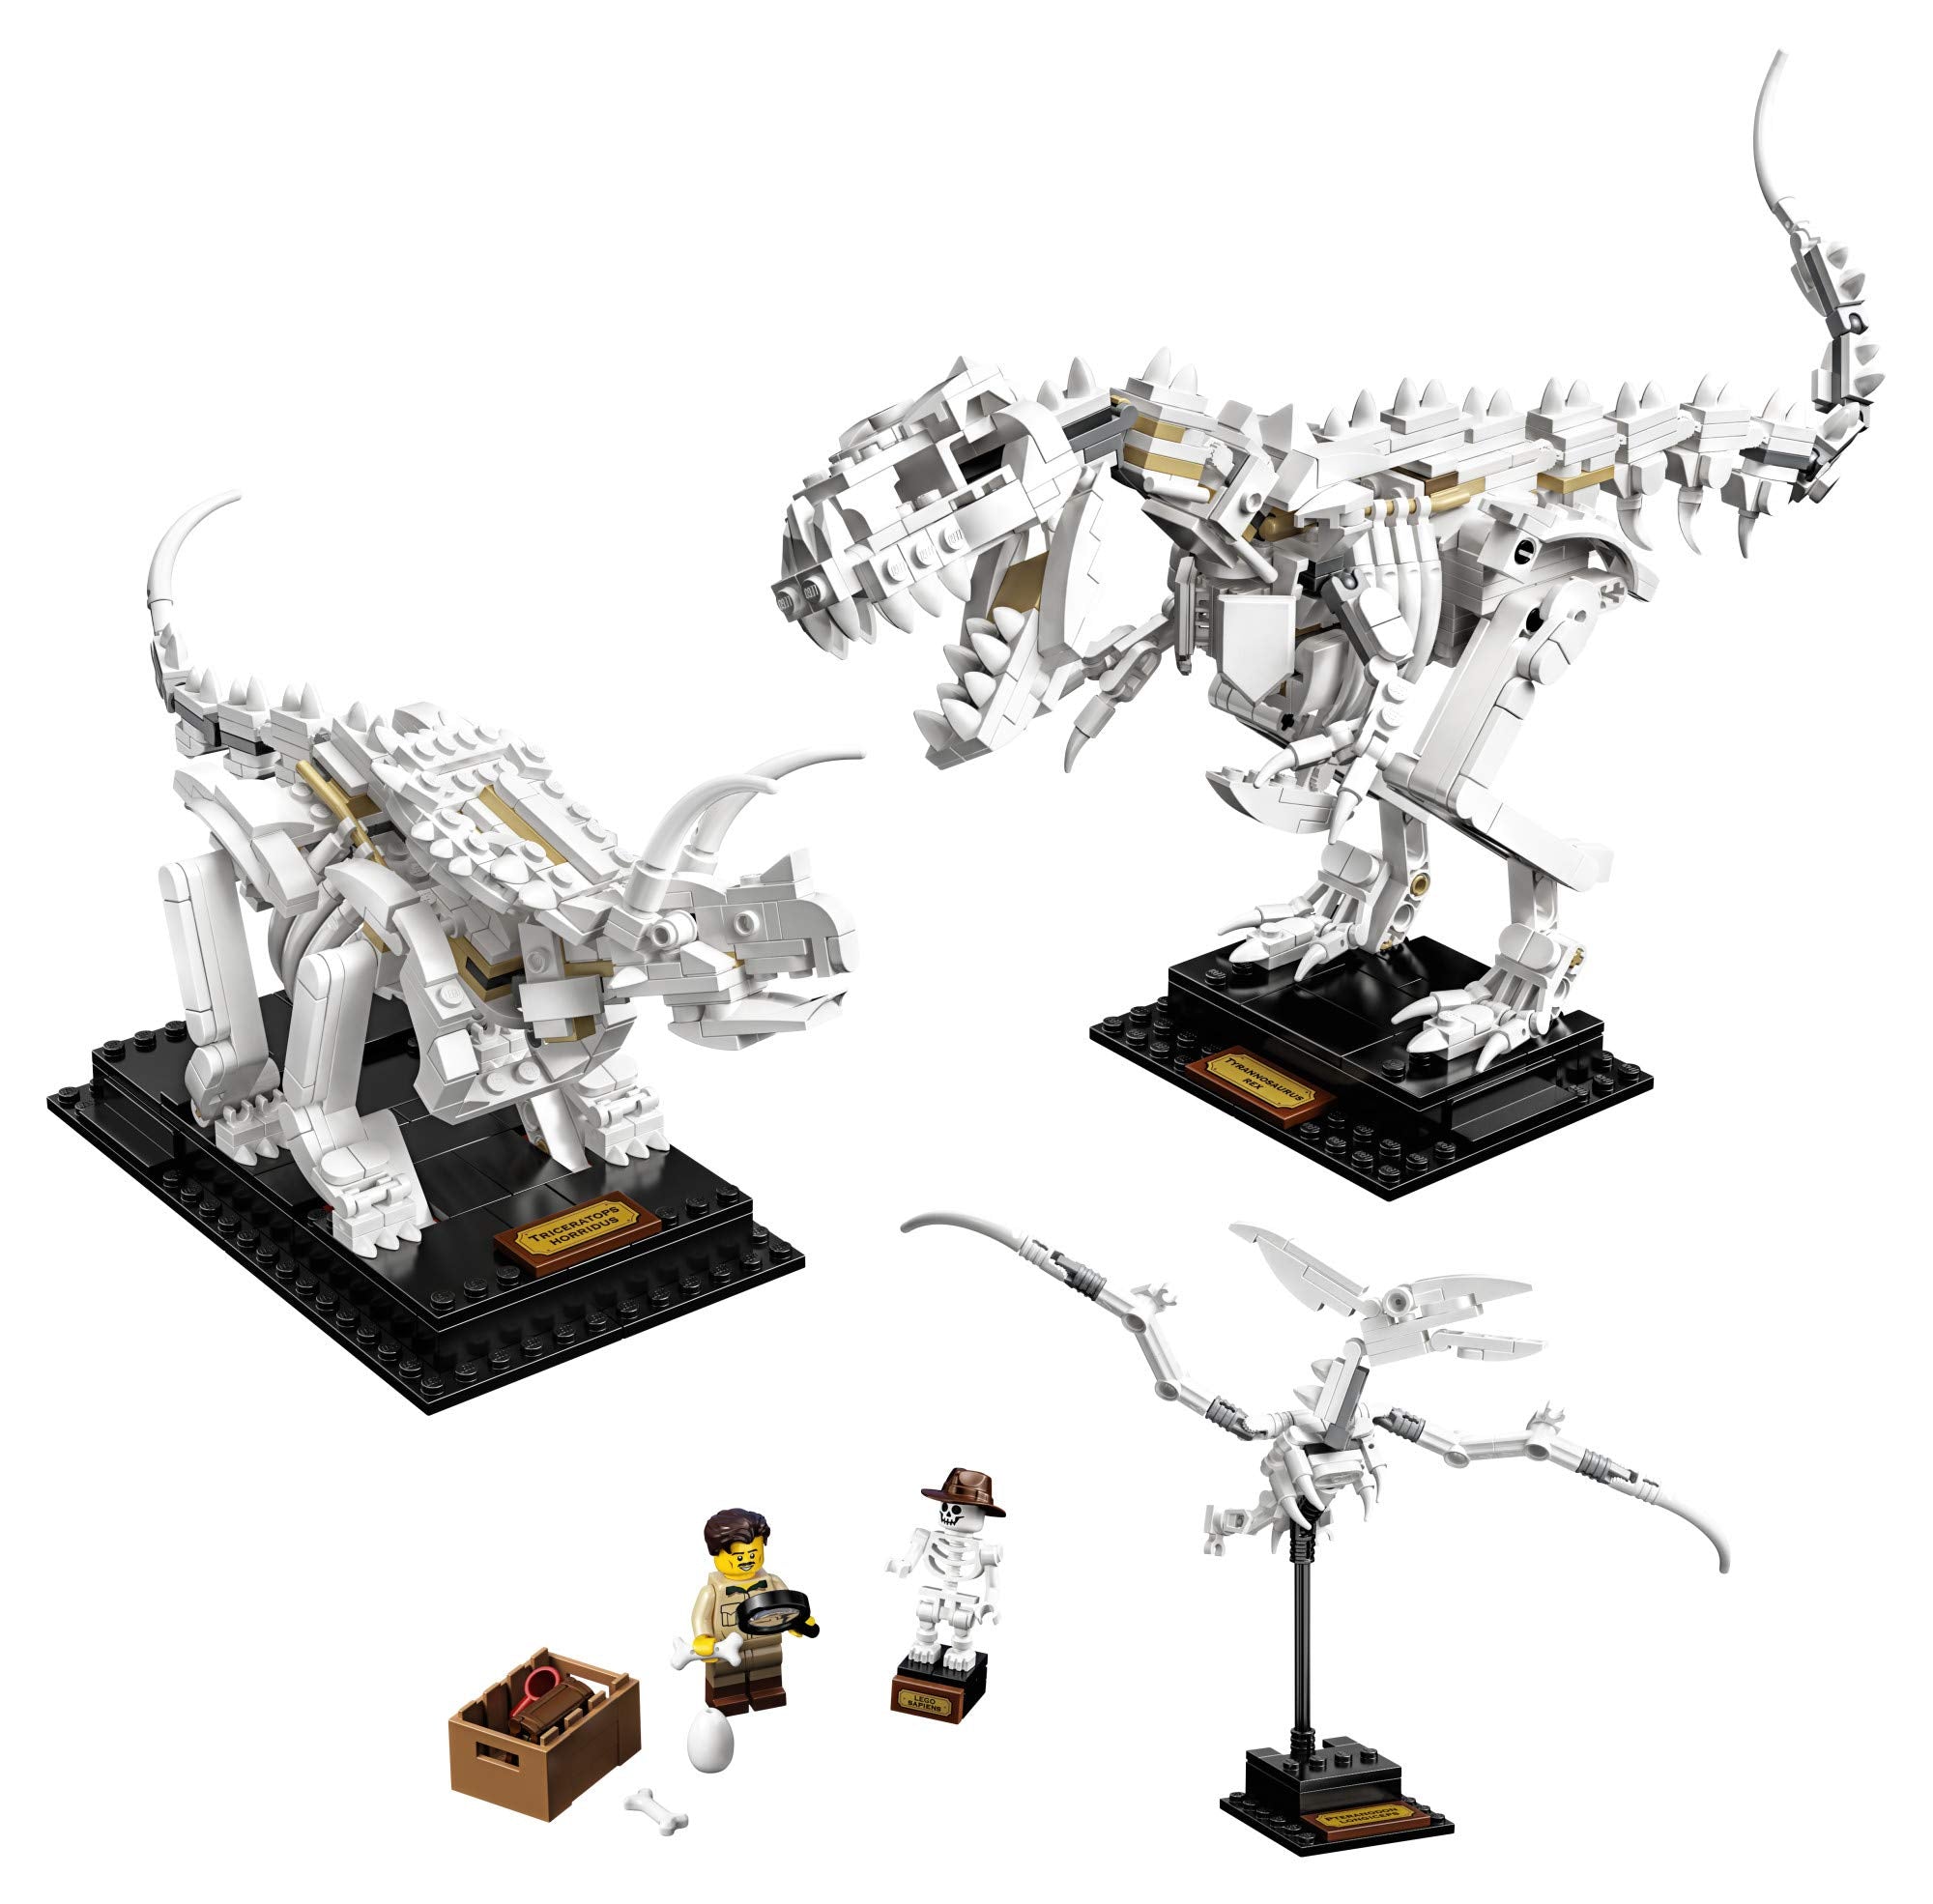 LEGO Ideas 21320 Dinosaur Fossils Building Kit (910 Pieces) (Like New, Open Box)